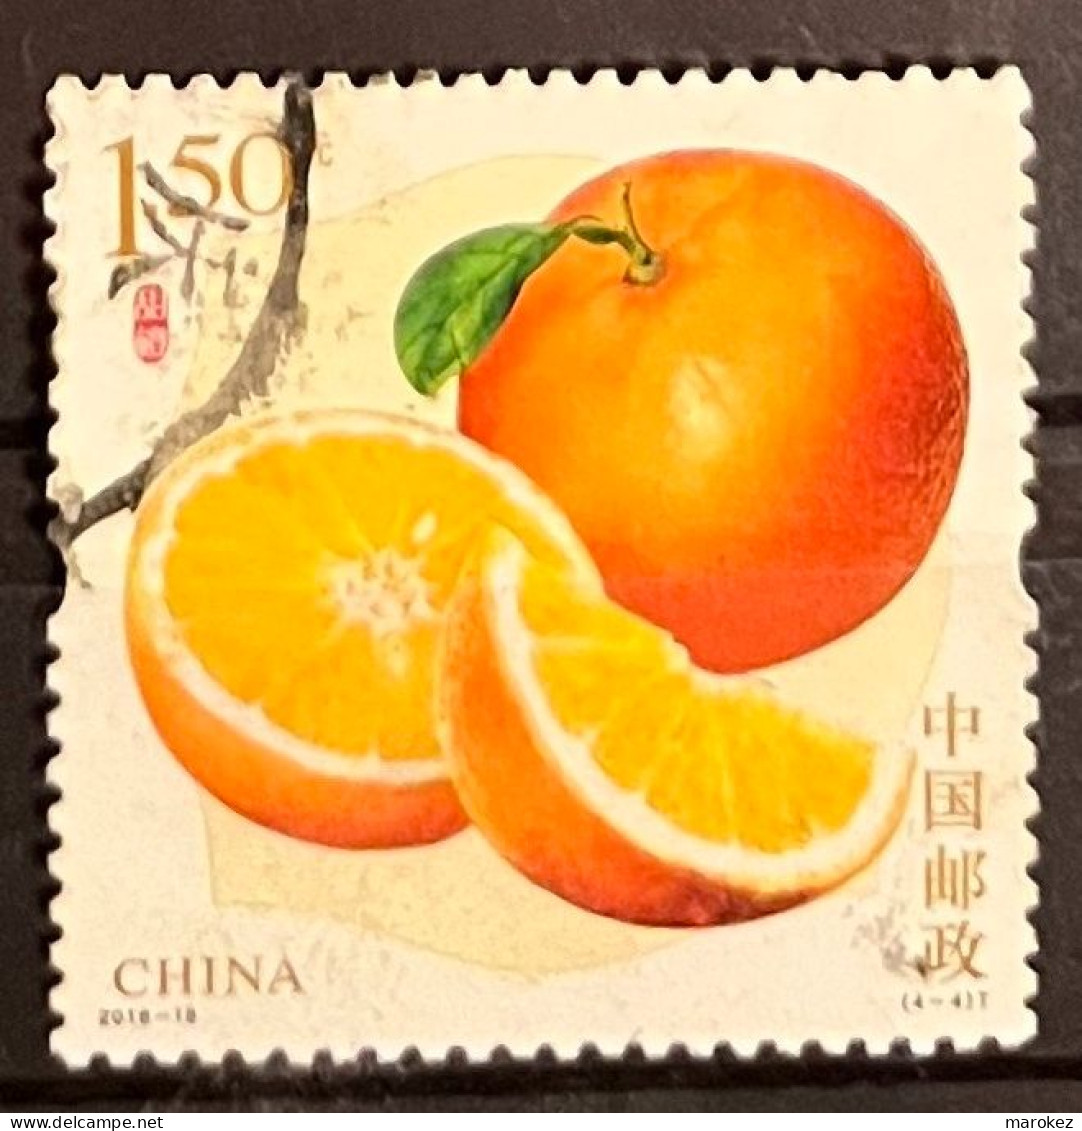 CHINA PRC 2018 Flora - Fruit; Orange Postally Used Stamp MICHEL # 5015 - Used Stamps